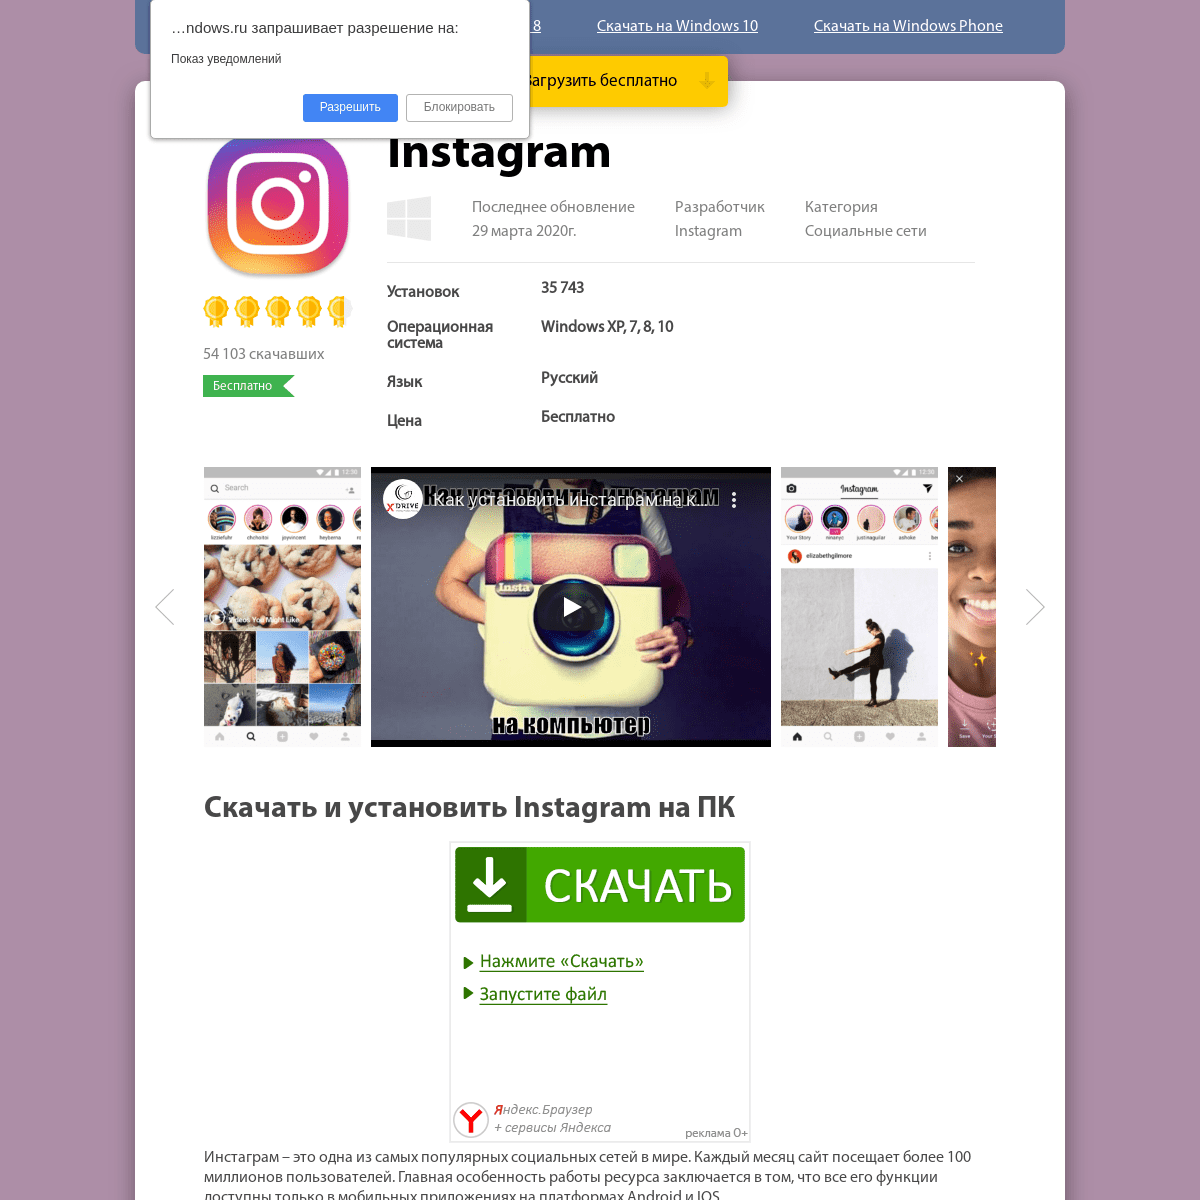 A complete backup of instagram-windows.ru